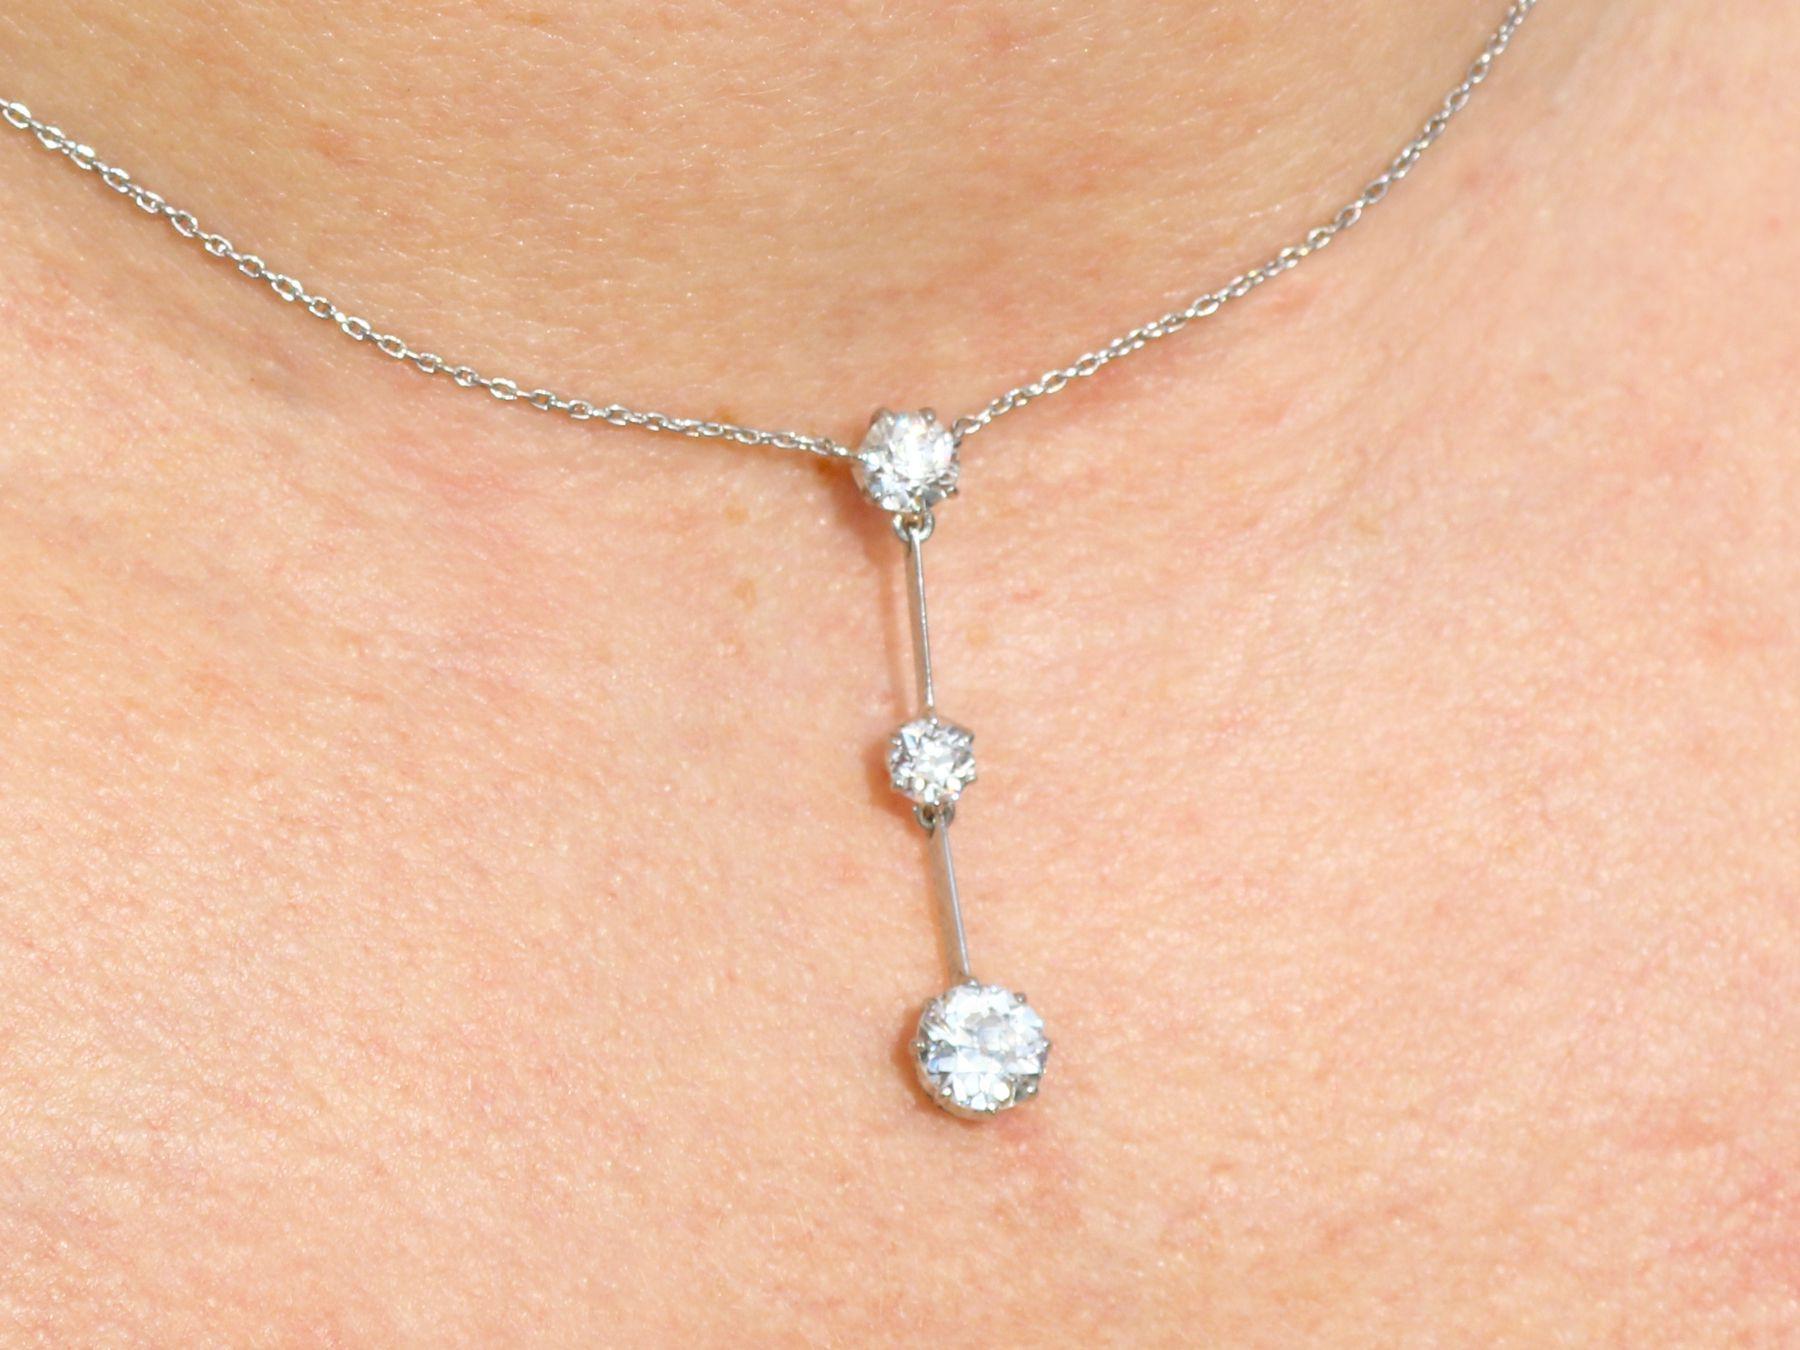 Antique 1.74 Carat Diamond and Platinum Necklace For Sale 3